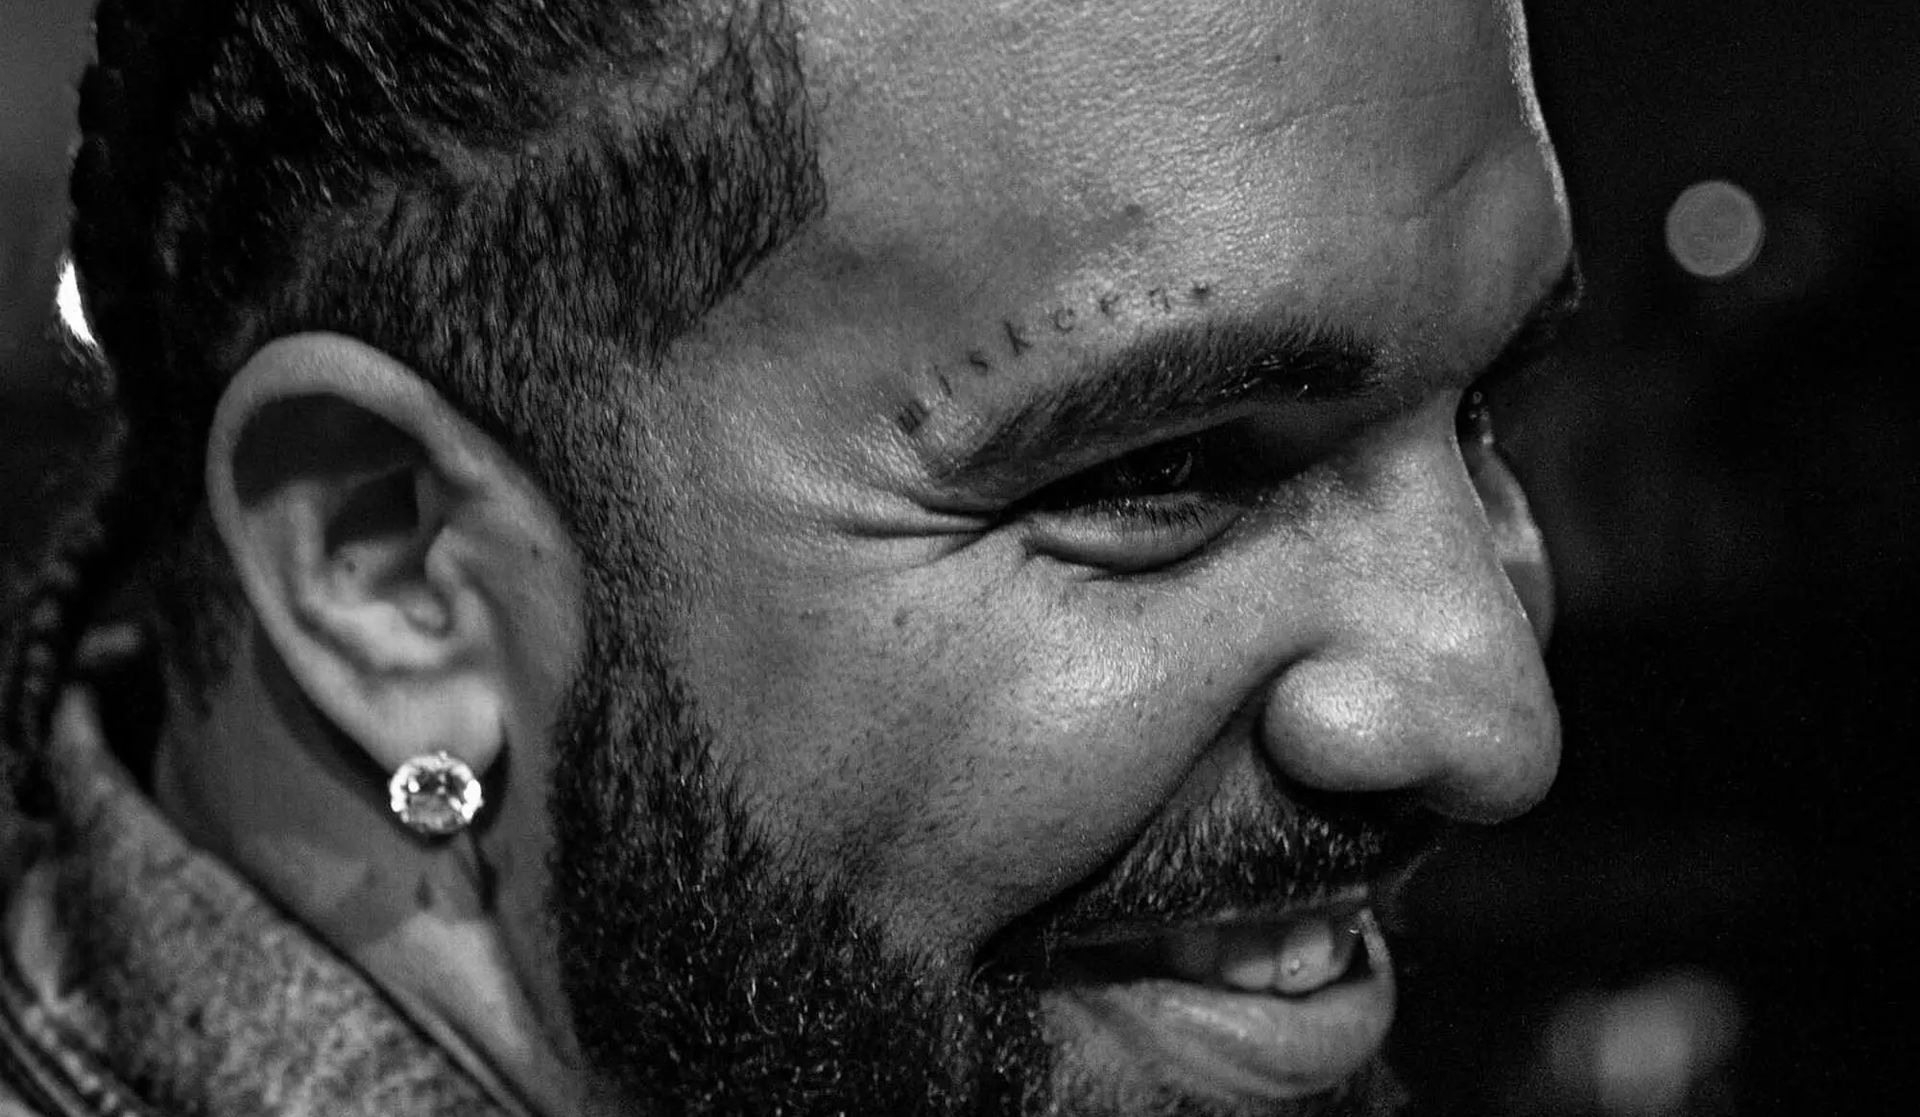 New Drake face tattoo